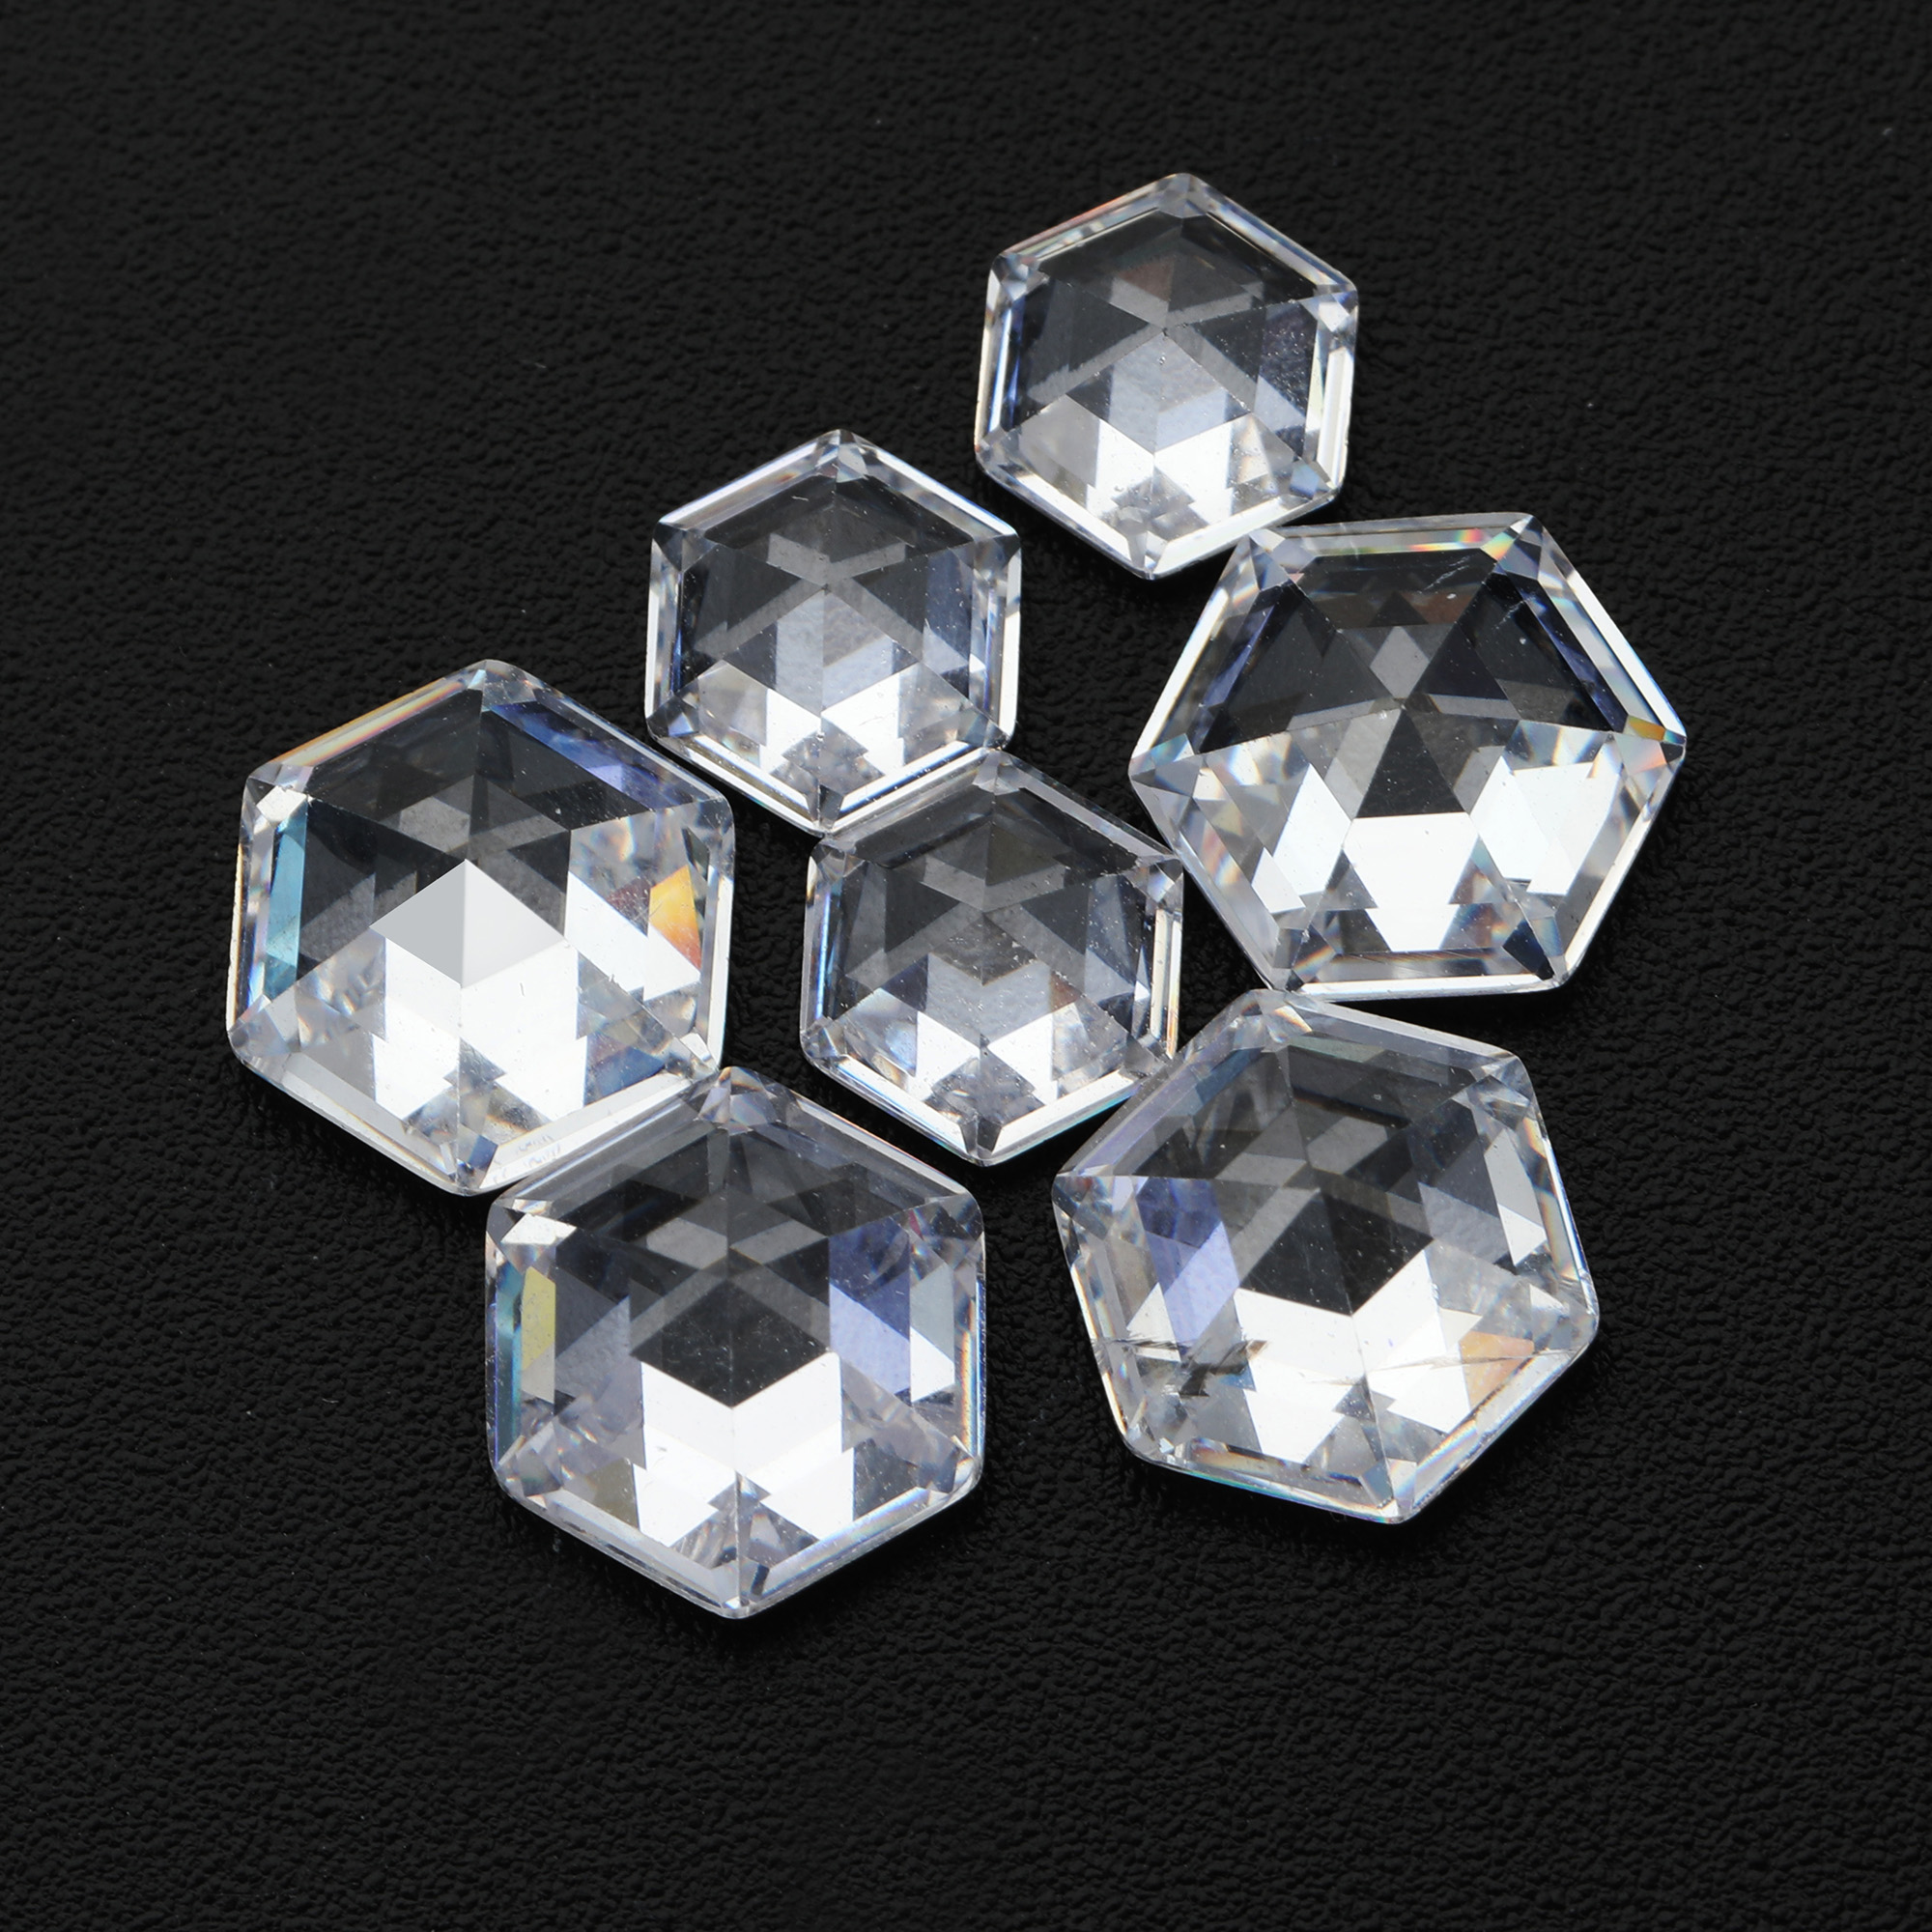 5Pcs Cubic Zirconia Hexagon Faceted CZ Stone,White Birthstone,April Birthstone,Loose Gemstone,Semi-precious Gemstone,Unique Gemstone,DIY Jewelry Supplies 4160075 - Click Image to Close